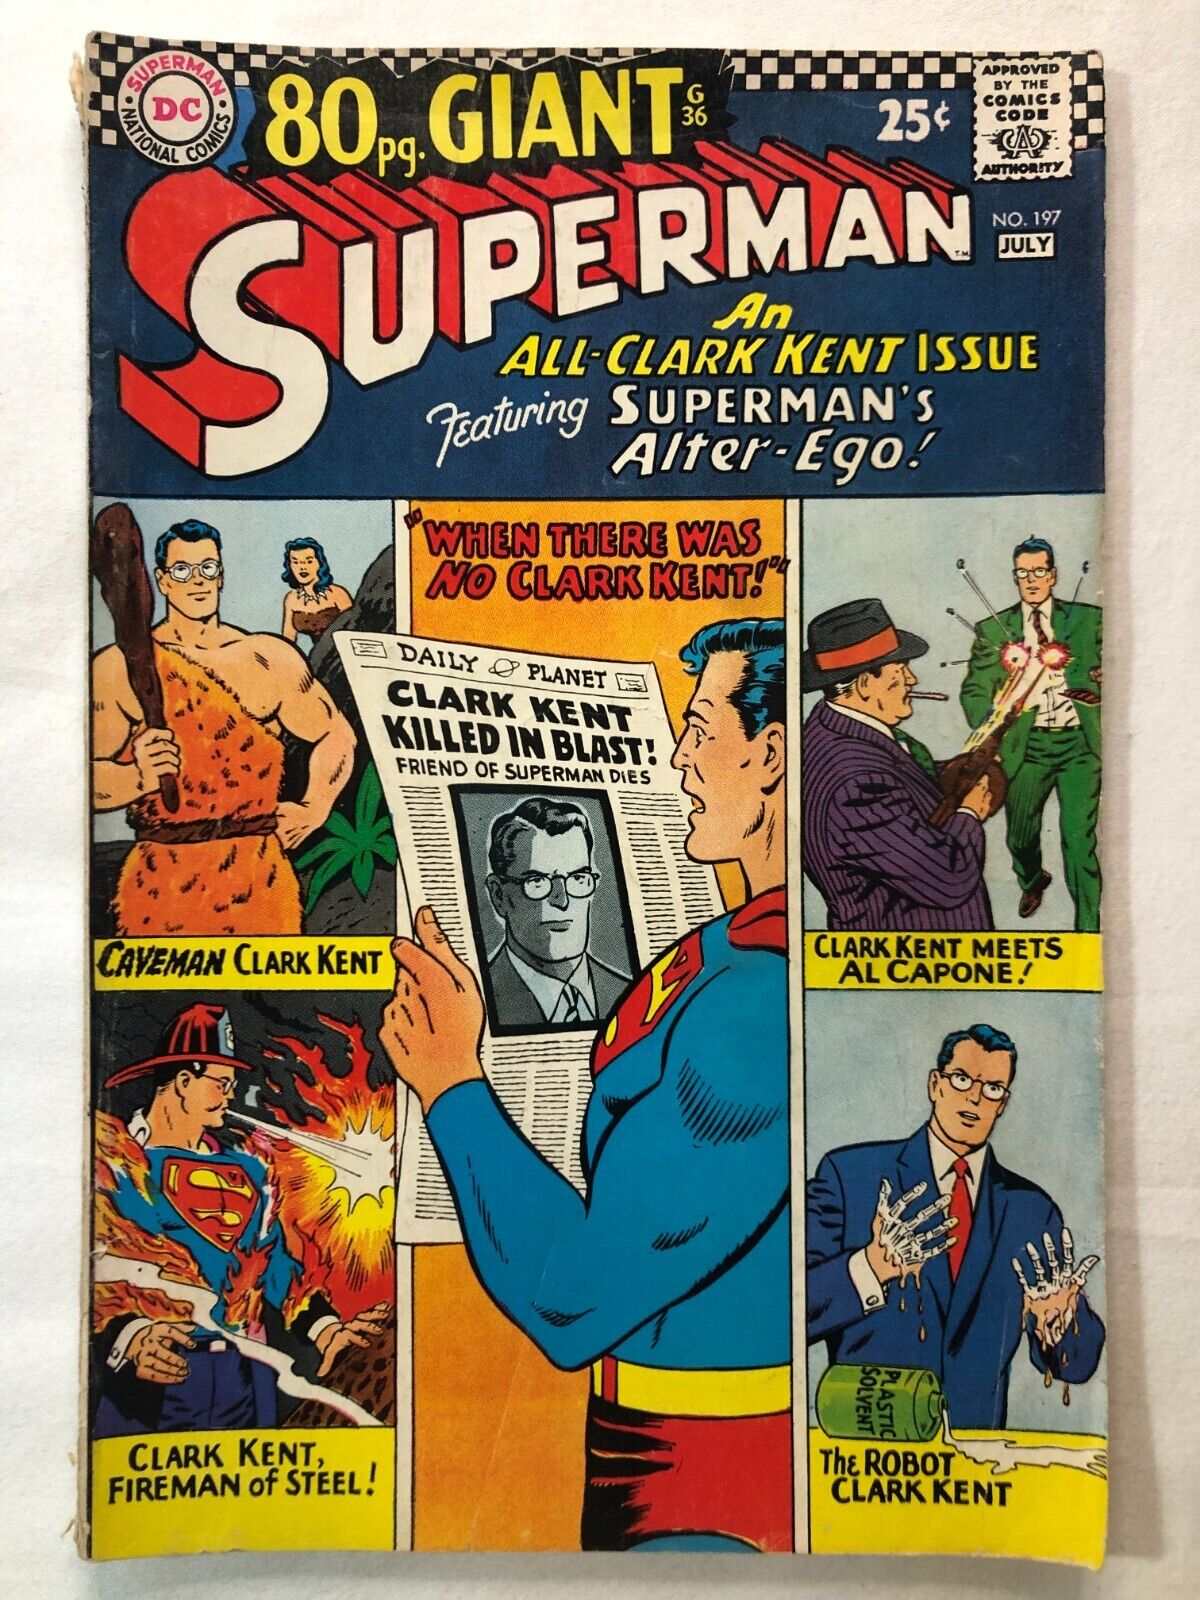 Superman #197 June/July 1967 Vintage Silver Age DC Comics 80 Page Giant Nice